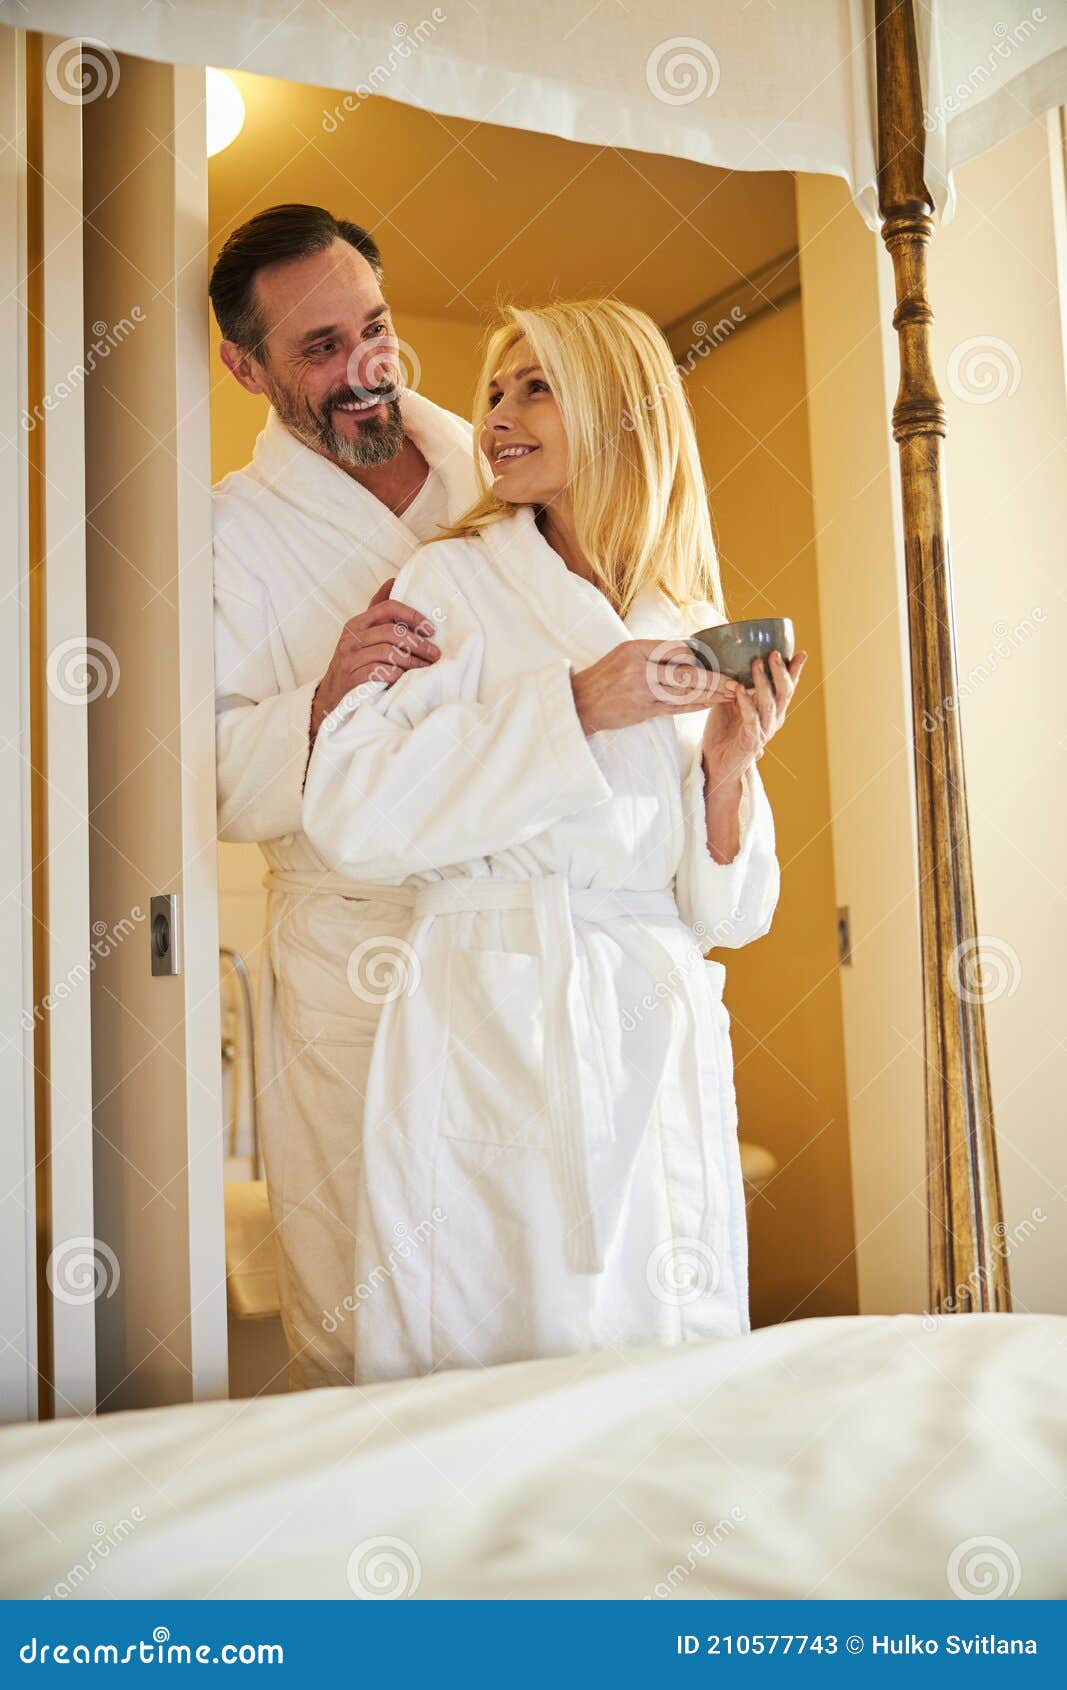 https://thumbs.dreamstime.com/z/cheerful-blonde-lady-her-husband-wearing-white-bath-robes-hugging-standing-doorway-joyful-couple-cozy-bath-210577743.jpg